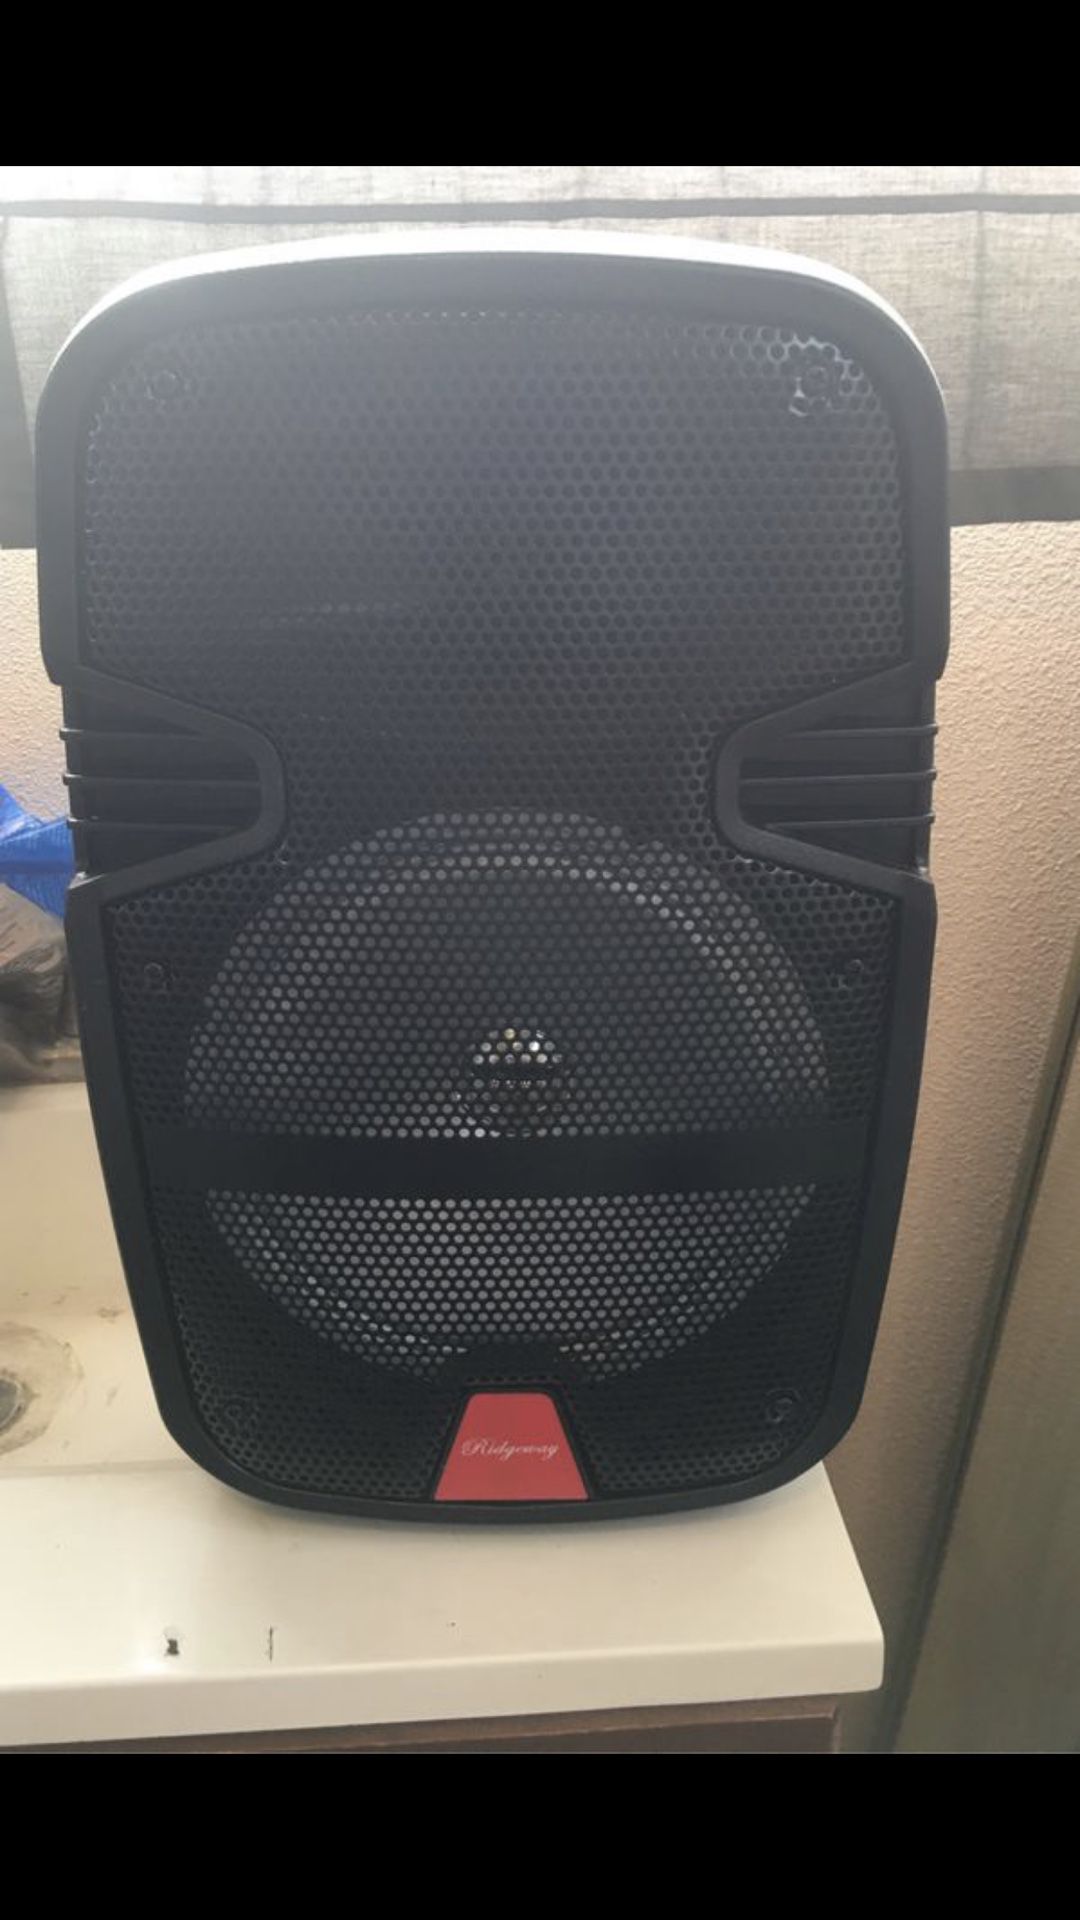 Ridgeway 8 inch portable Bluetooth speaker